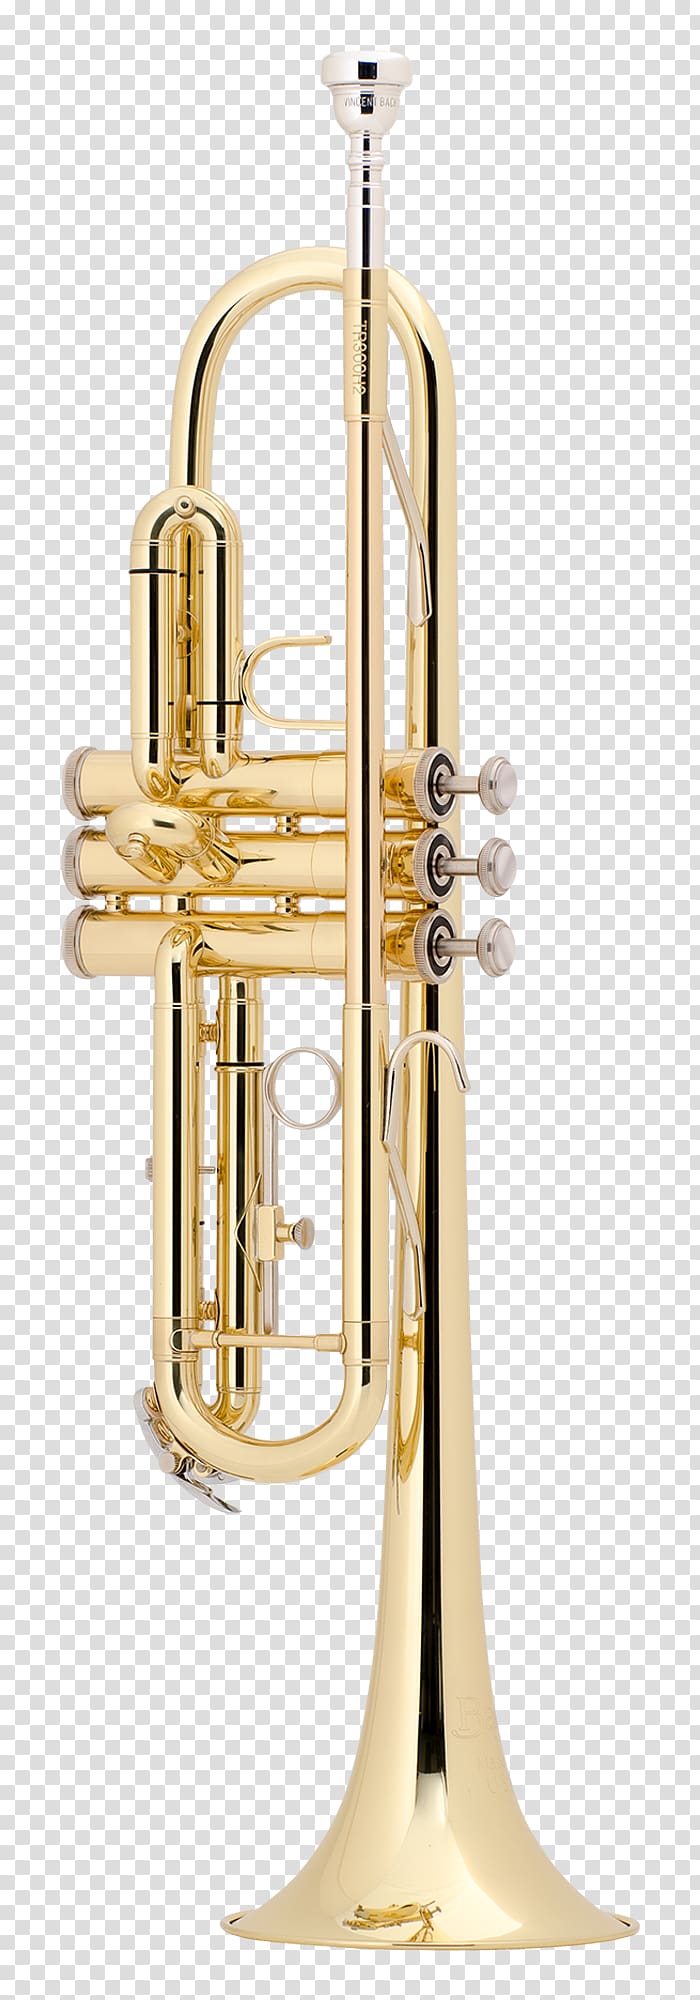 Brass Instruments Trumpet Musical Instruments Cornet Flugelhorn, Trumpet transparent background PNG clipart